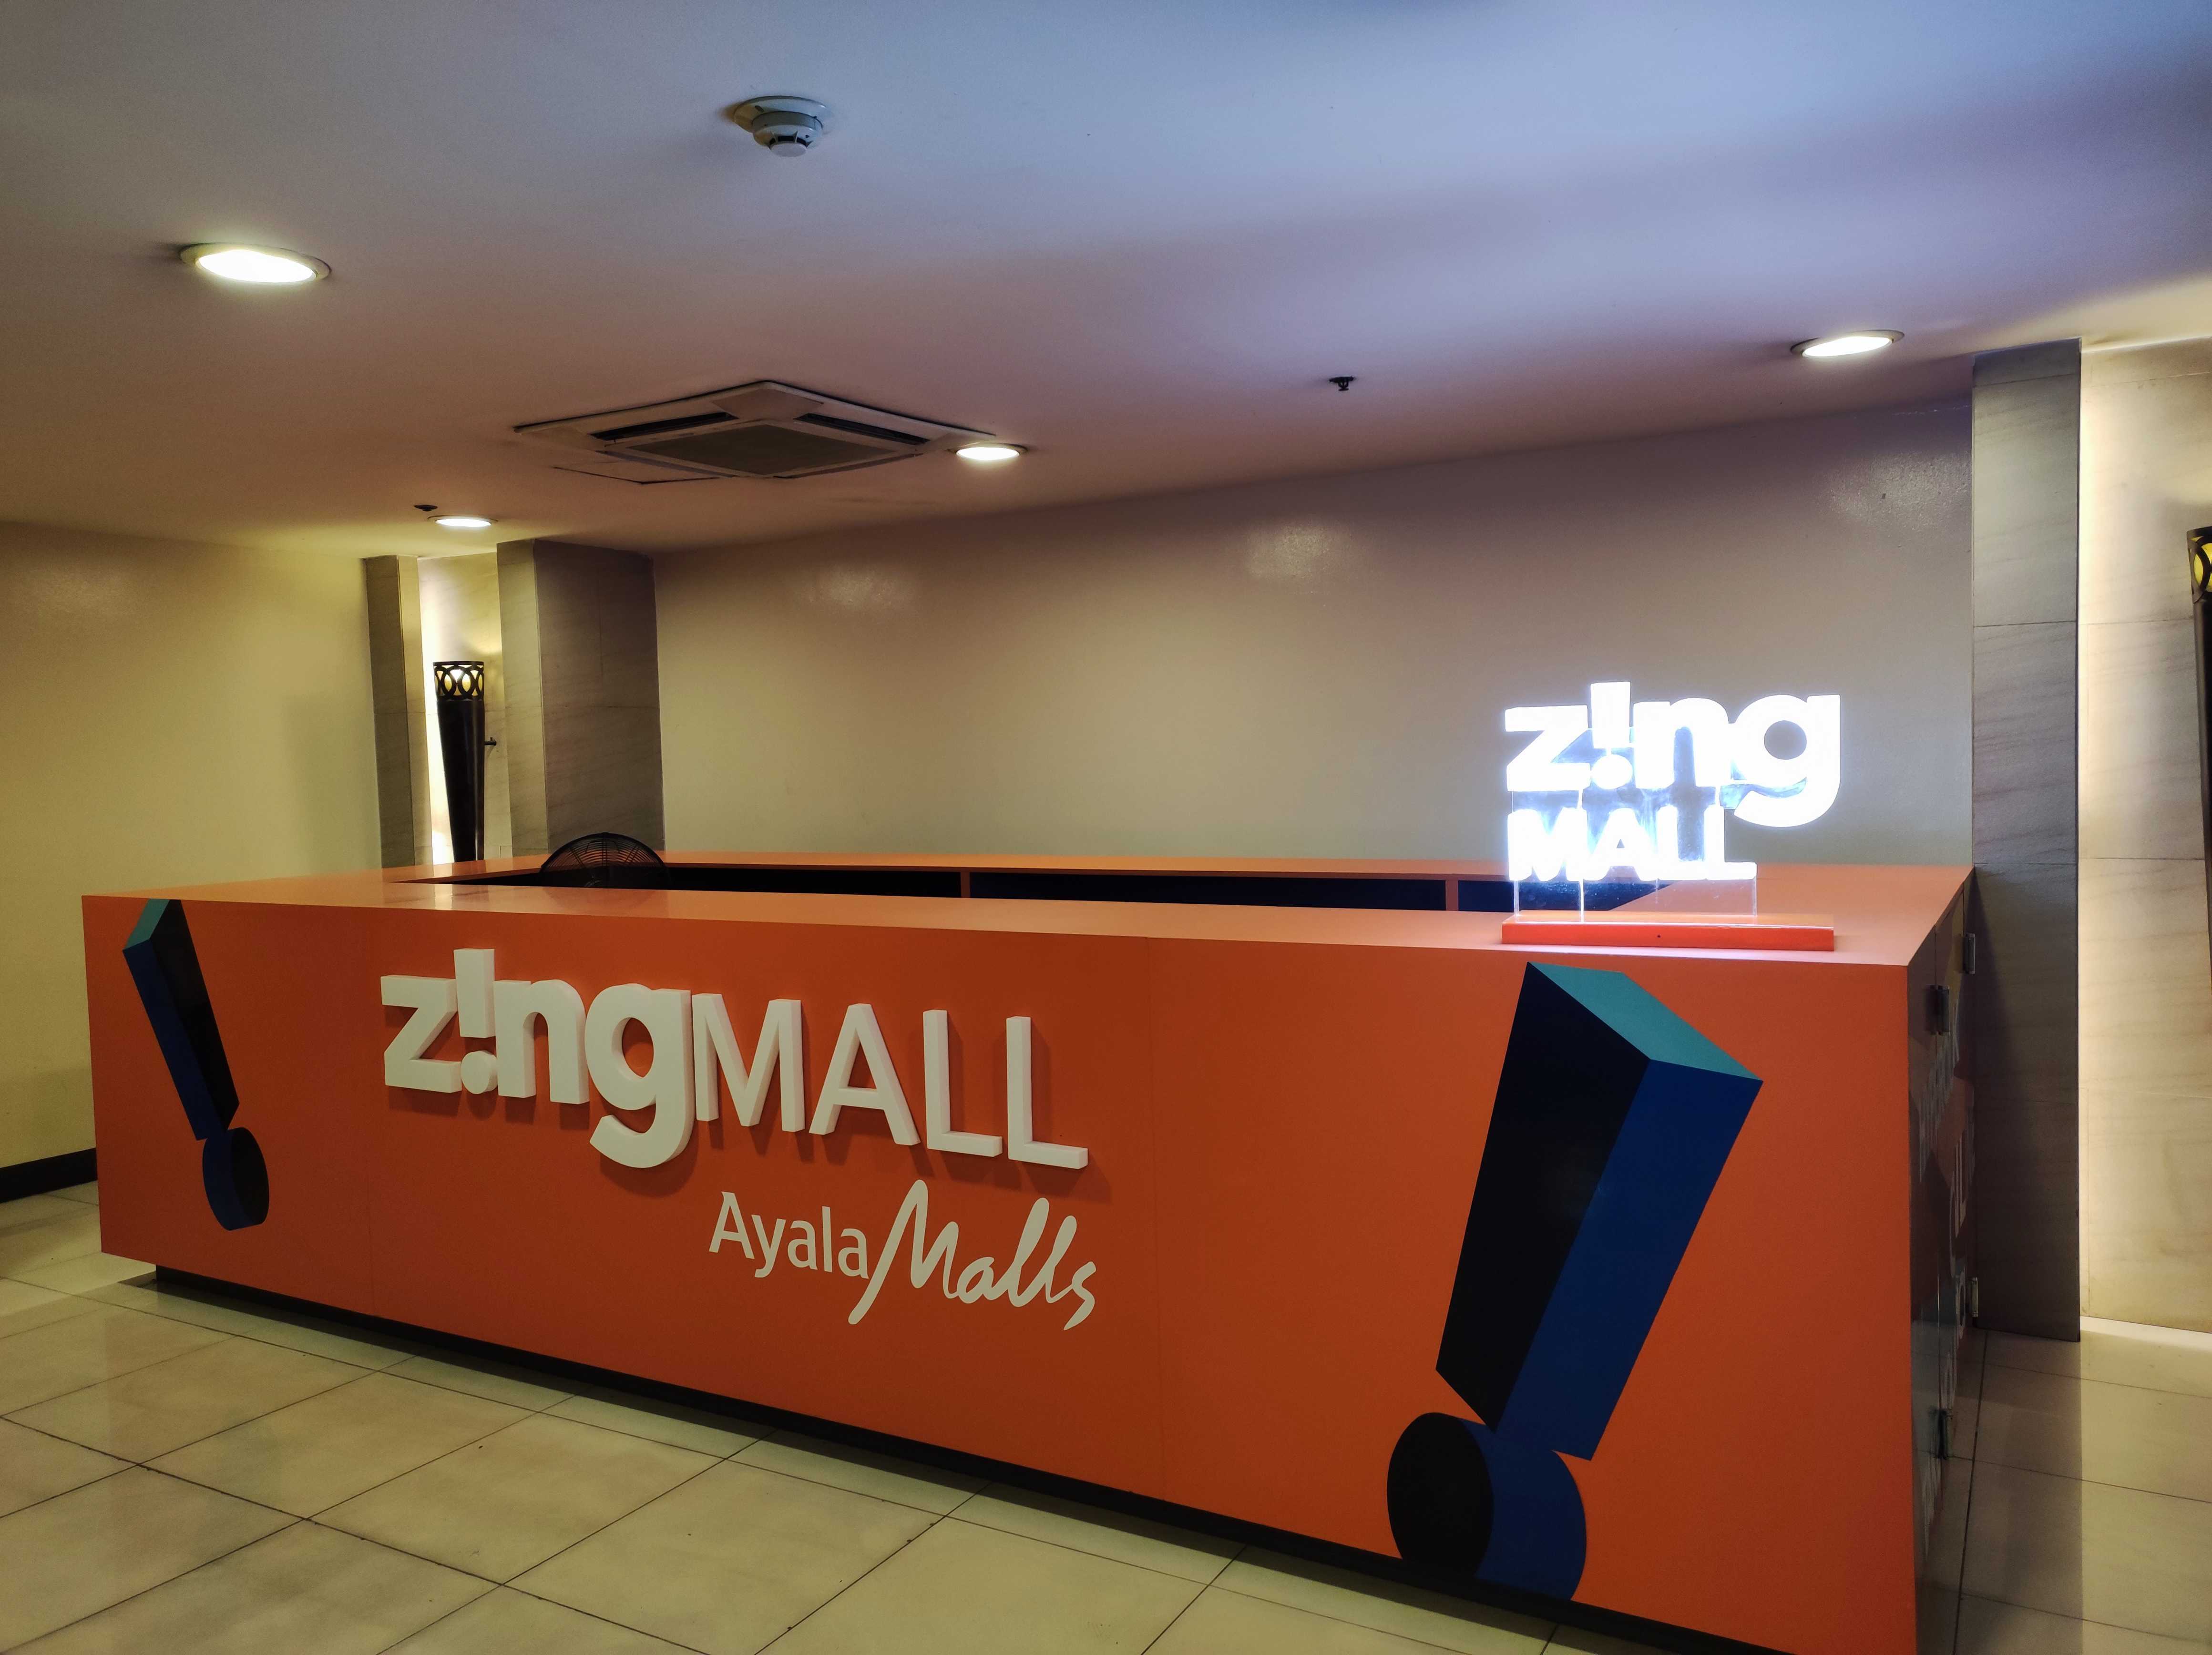 ZingMall consolidation areas